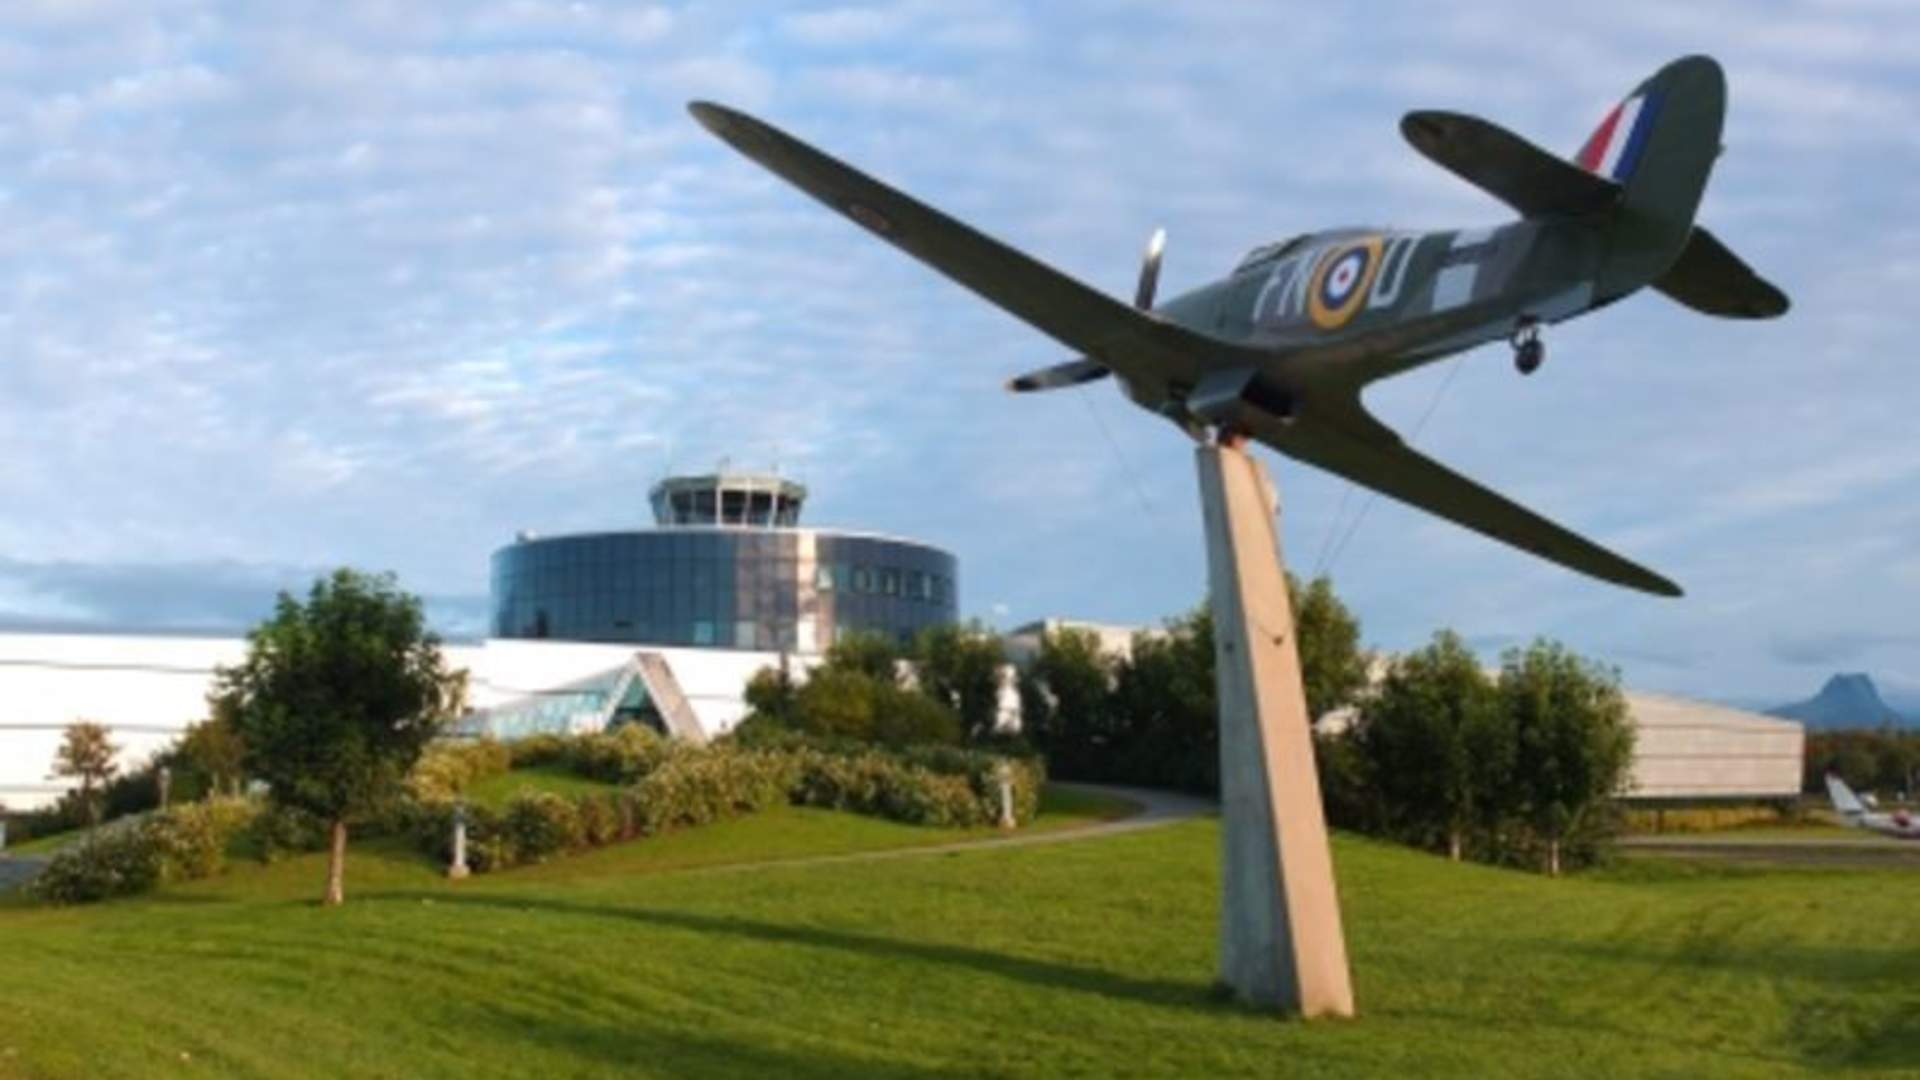 Opplev Norsk Luftfartsmuseum